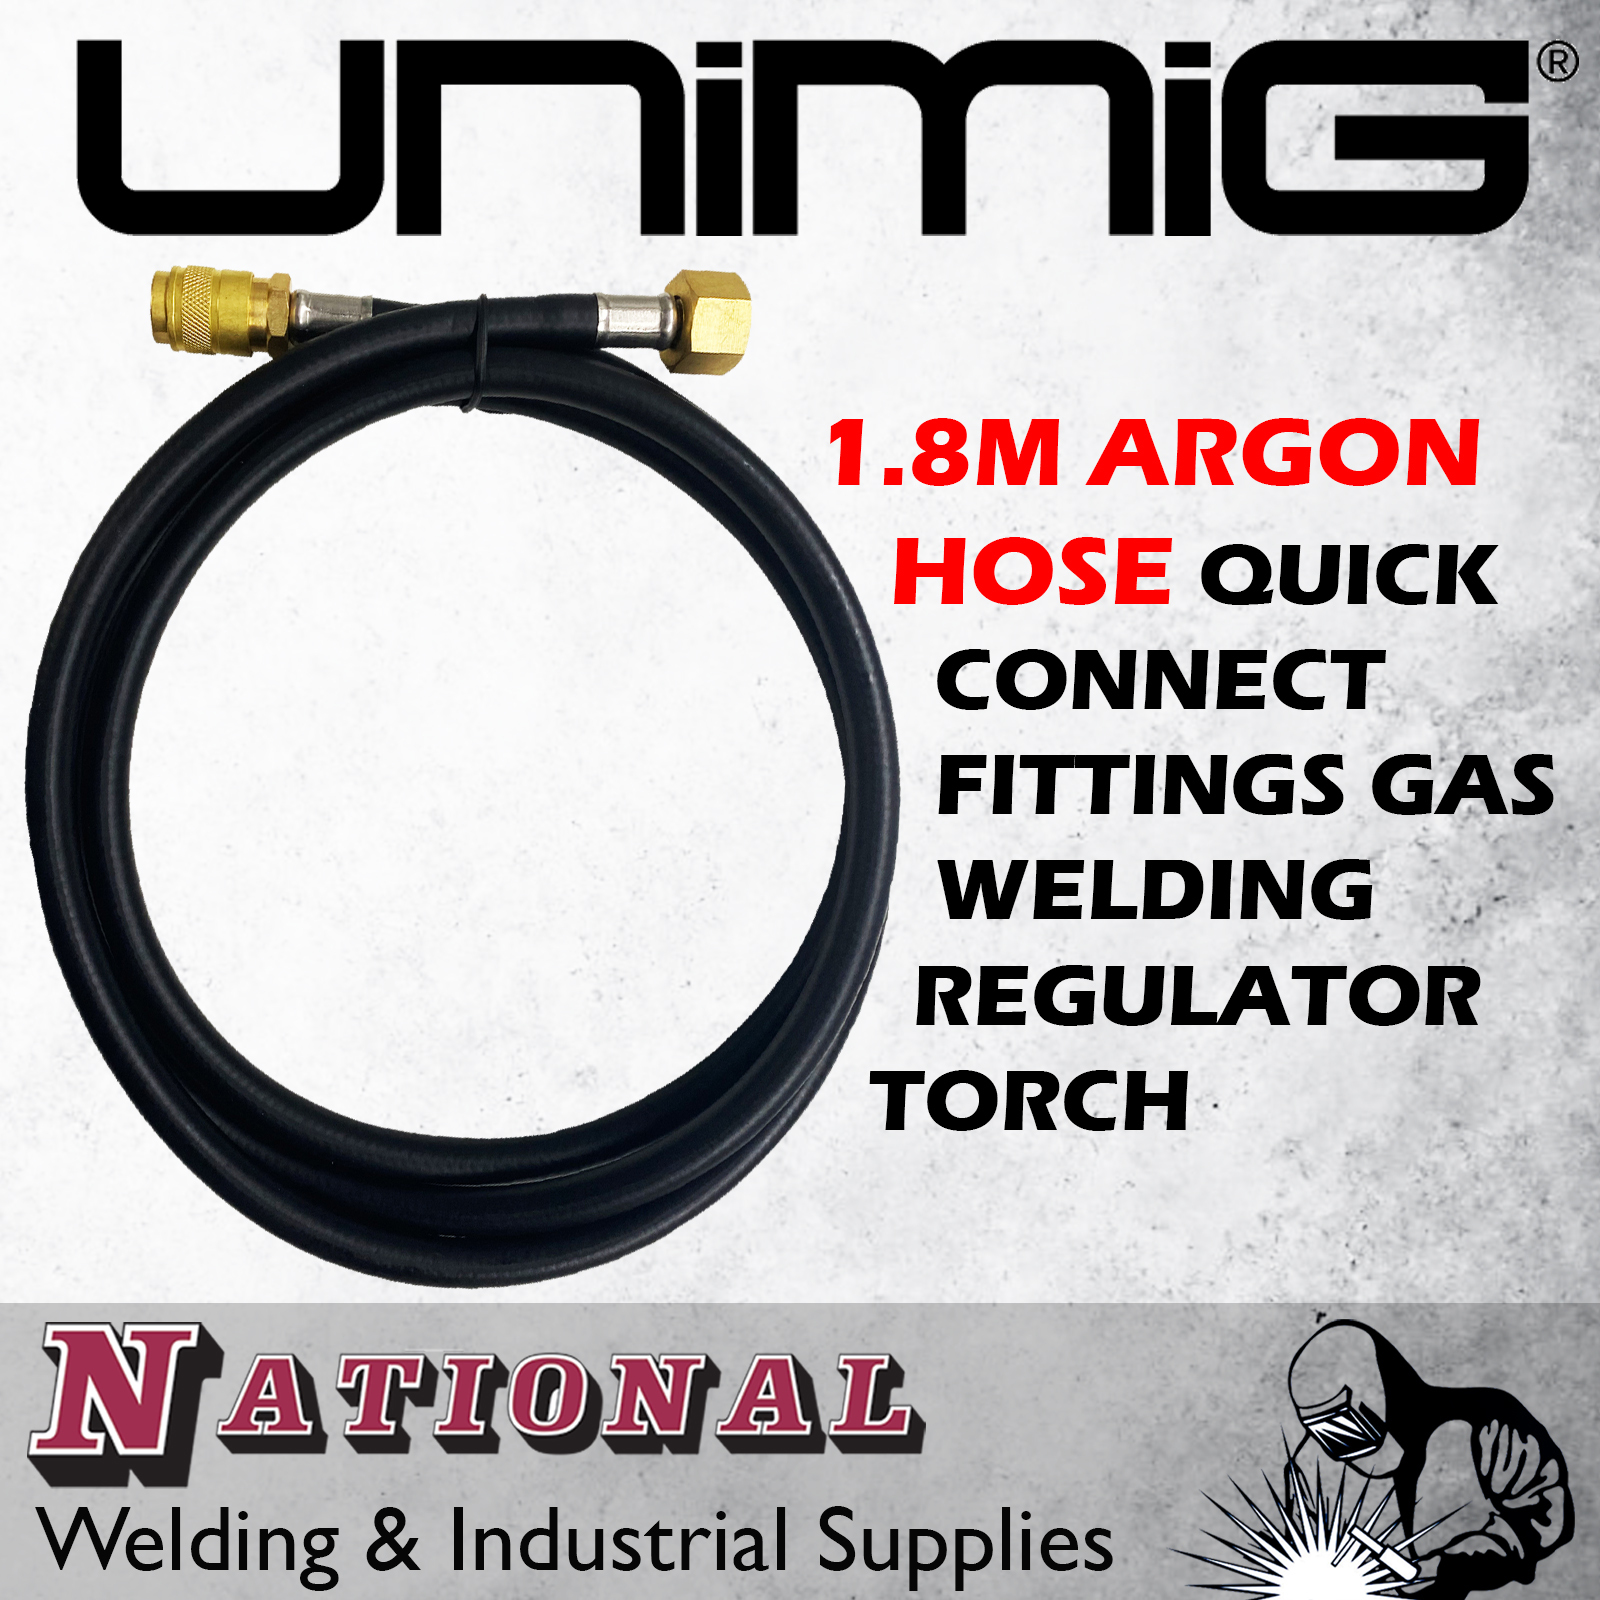 1.8m Argon Hose Quick Connect Fittings Gas Welding Regulator Torch Unimig  U31002